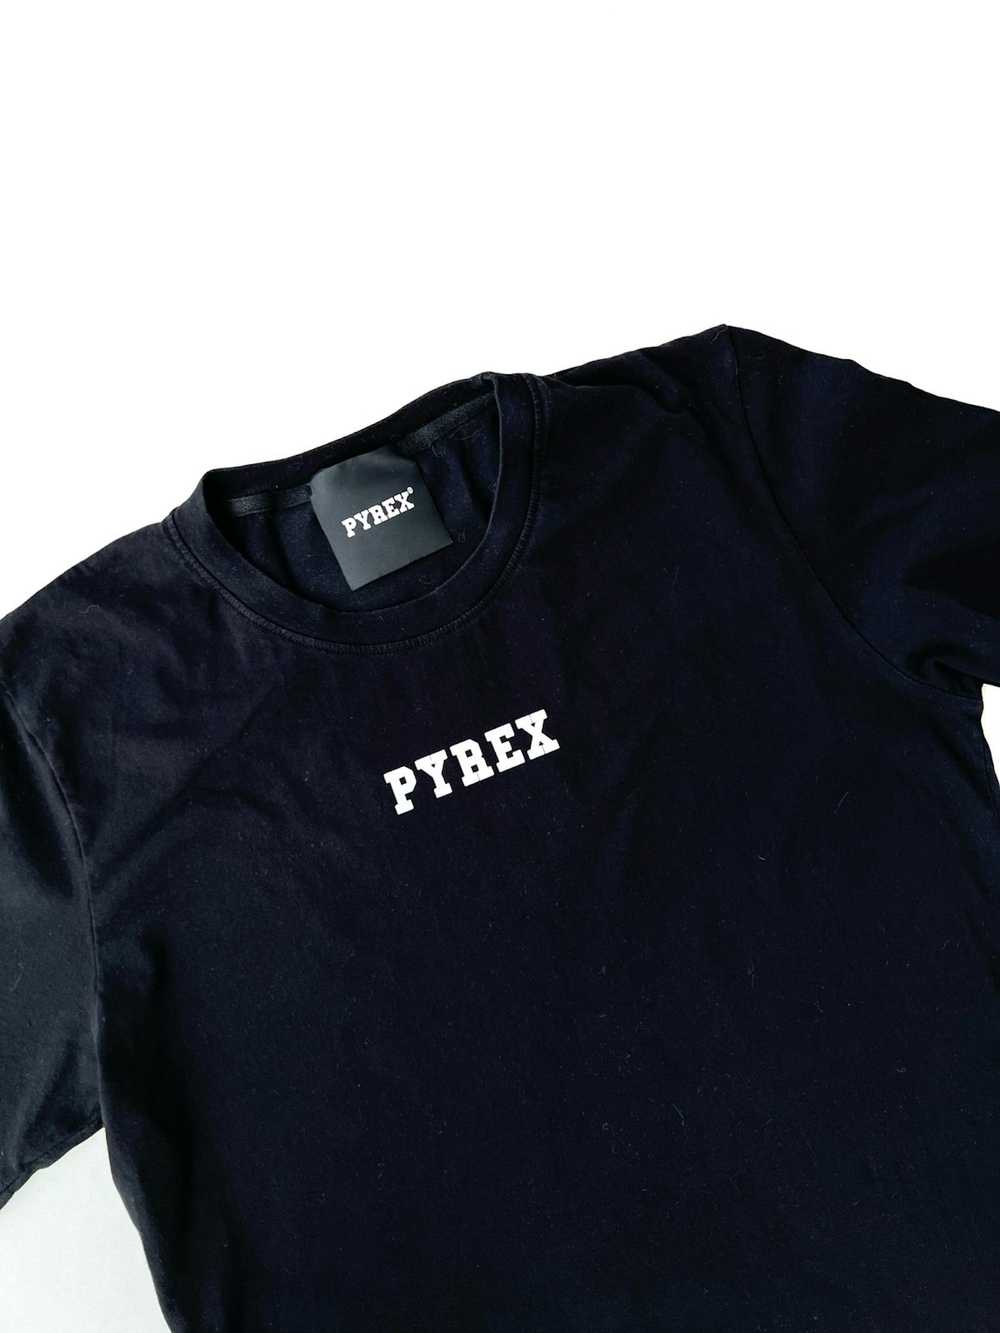 Pyrex Vision Pyrex Vision T-Shirt Big logo - image 5